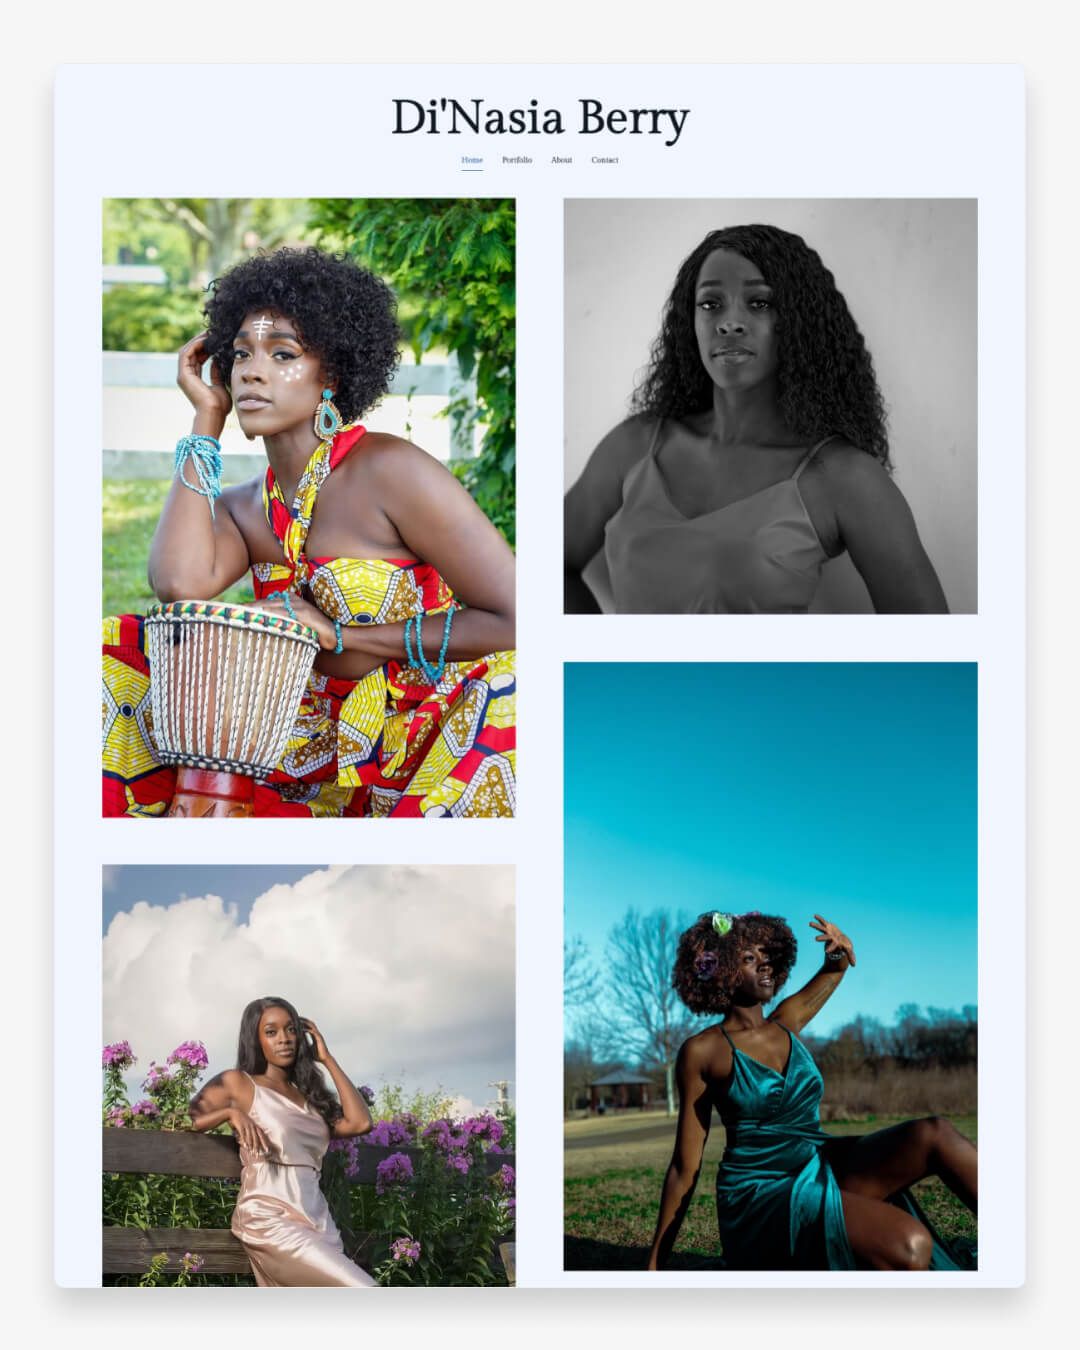 Di'Nasia Berry's Model portfolio website